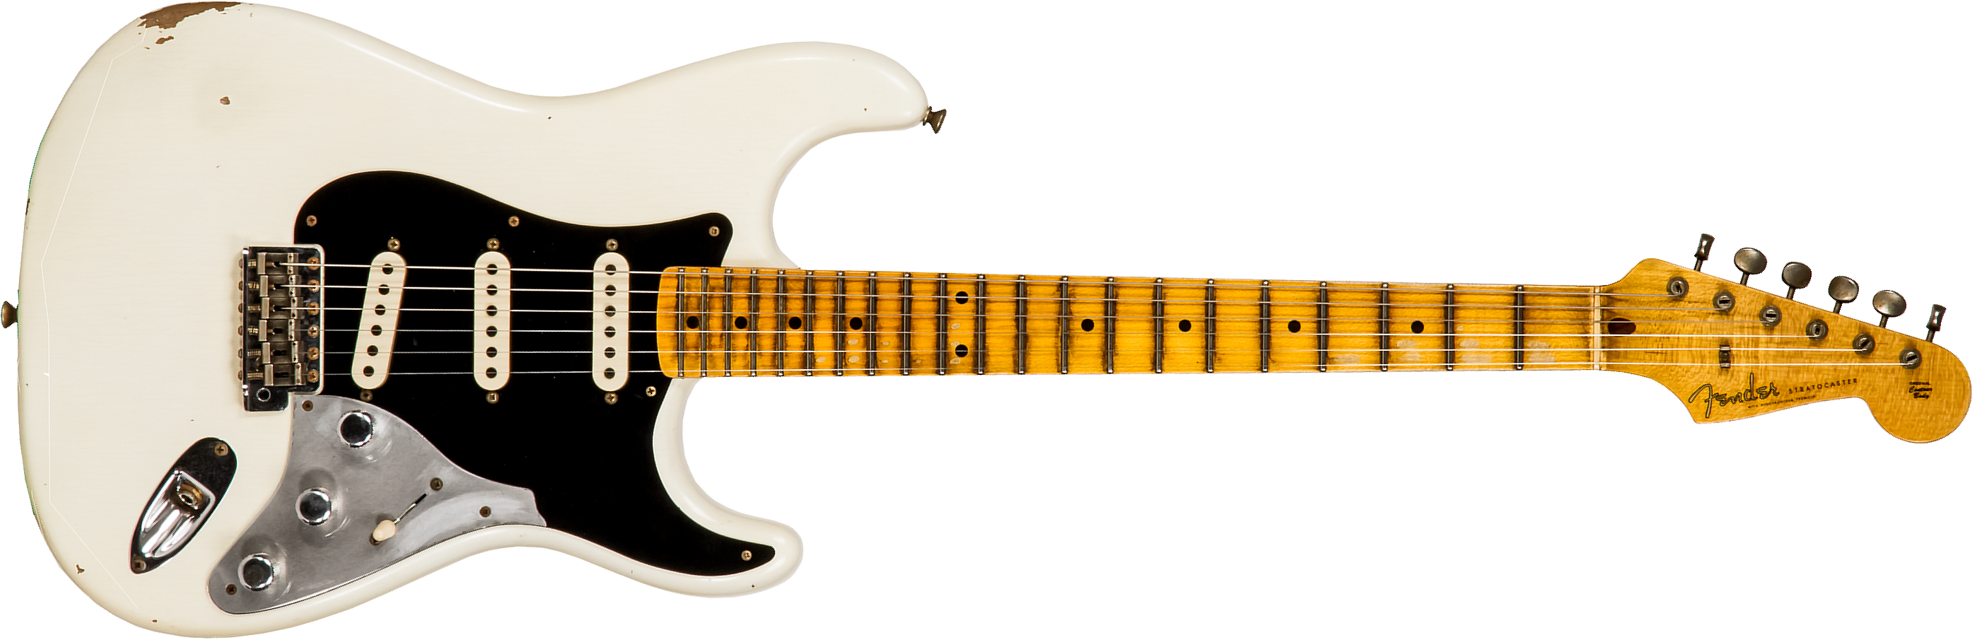 Fender Custom Shop Strat Poblano Ii 3s Trem Mn #cz555378 - Relic Olympic White - Guitarra eléctrica con forma de str. - Main picture